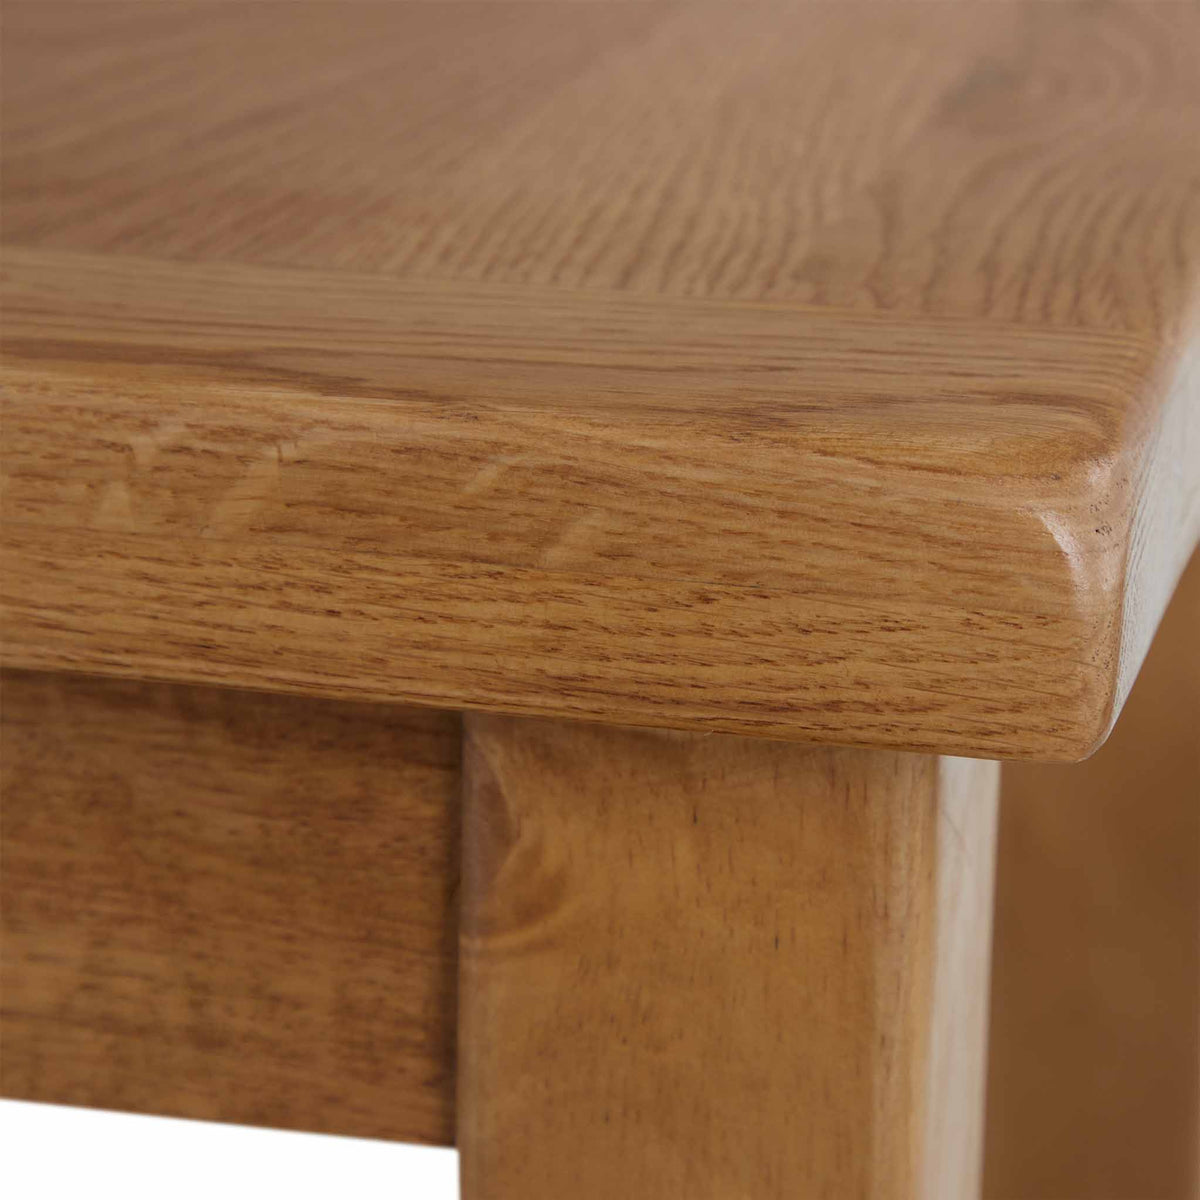 Zelah Oak Nest of Tables - Close up of corner of table